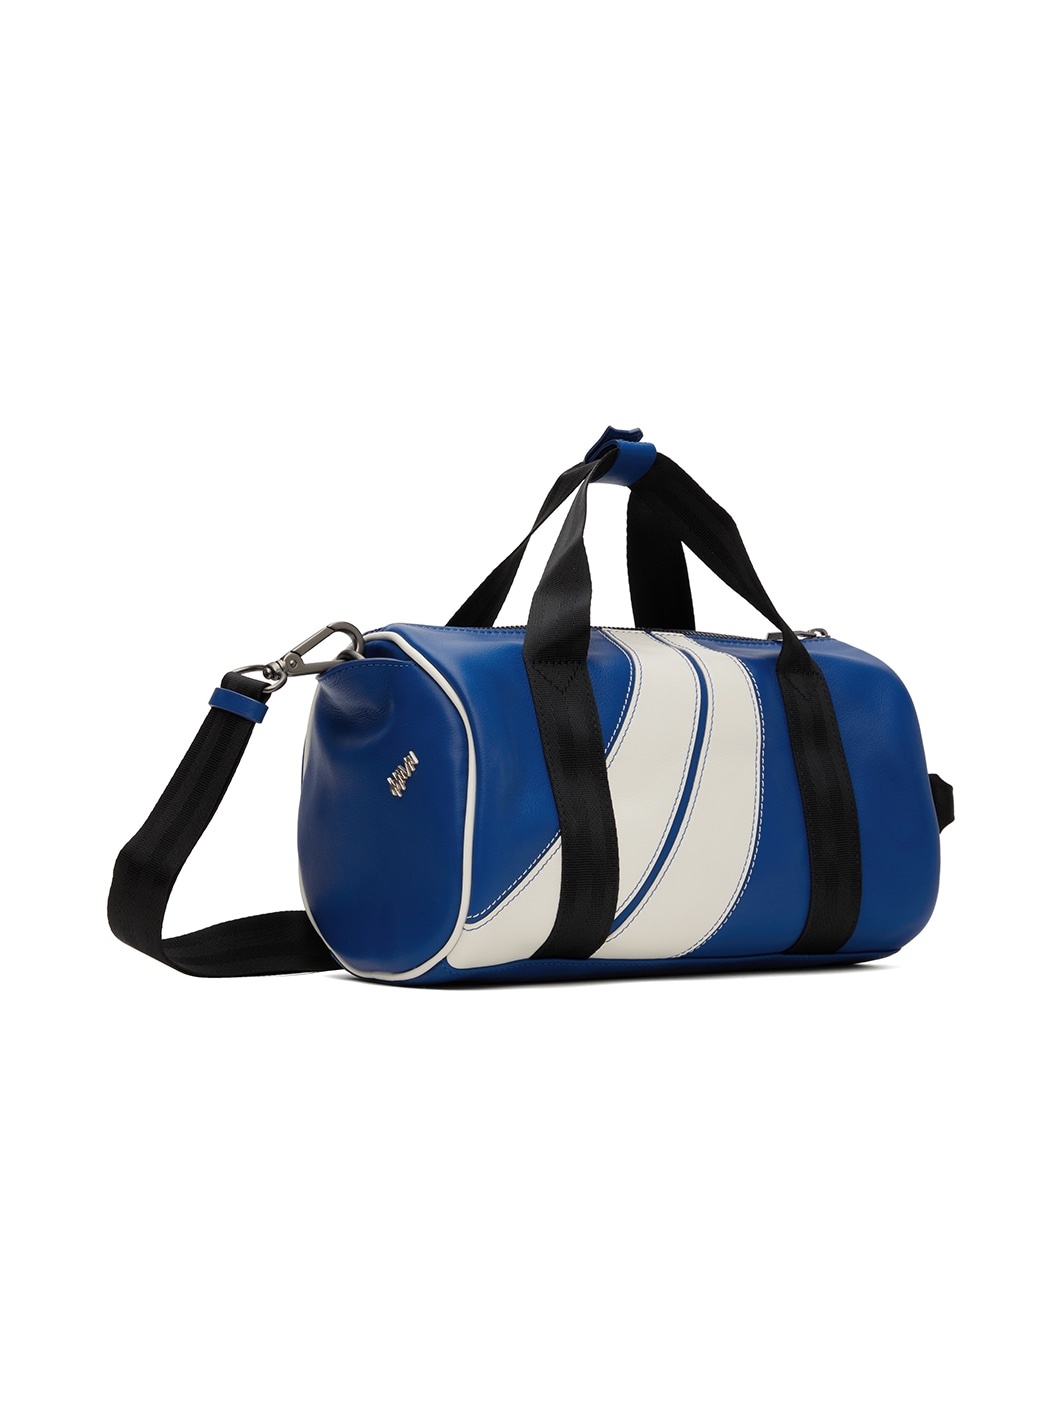 Blue Bashar Duffle Bag - 3